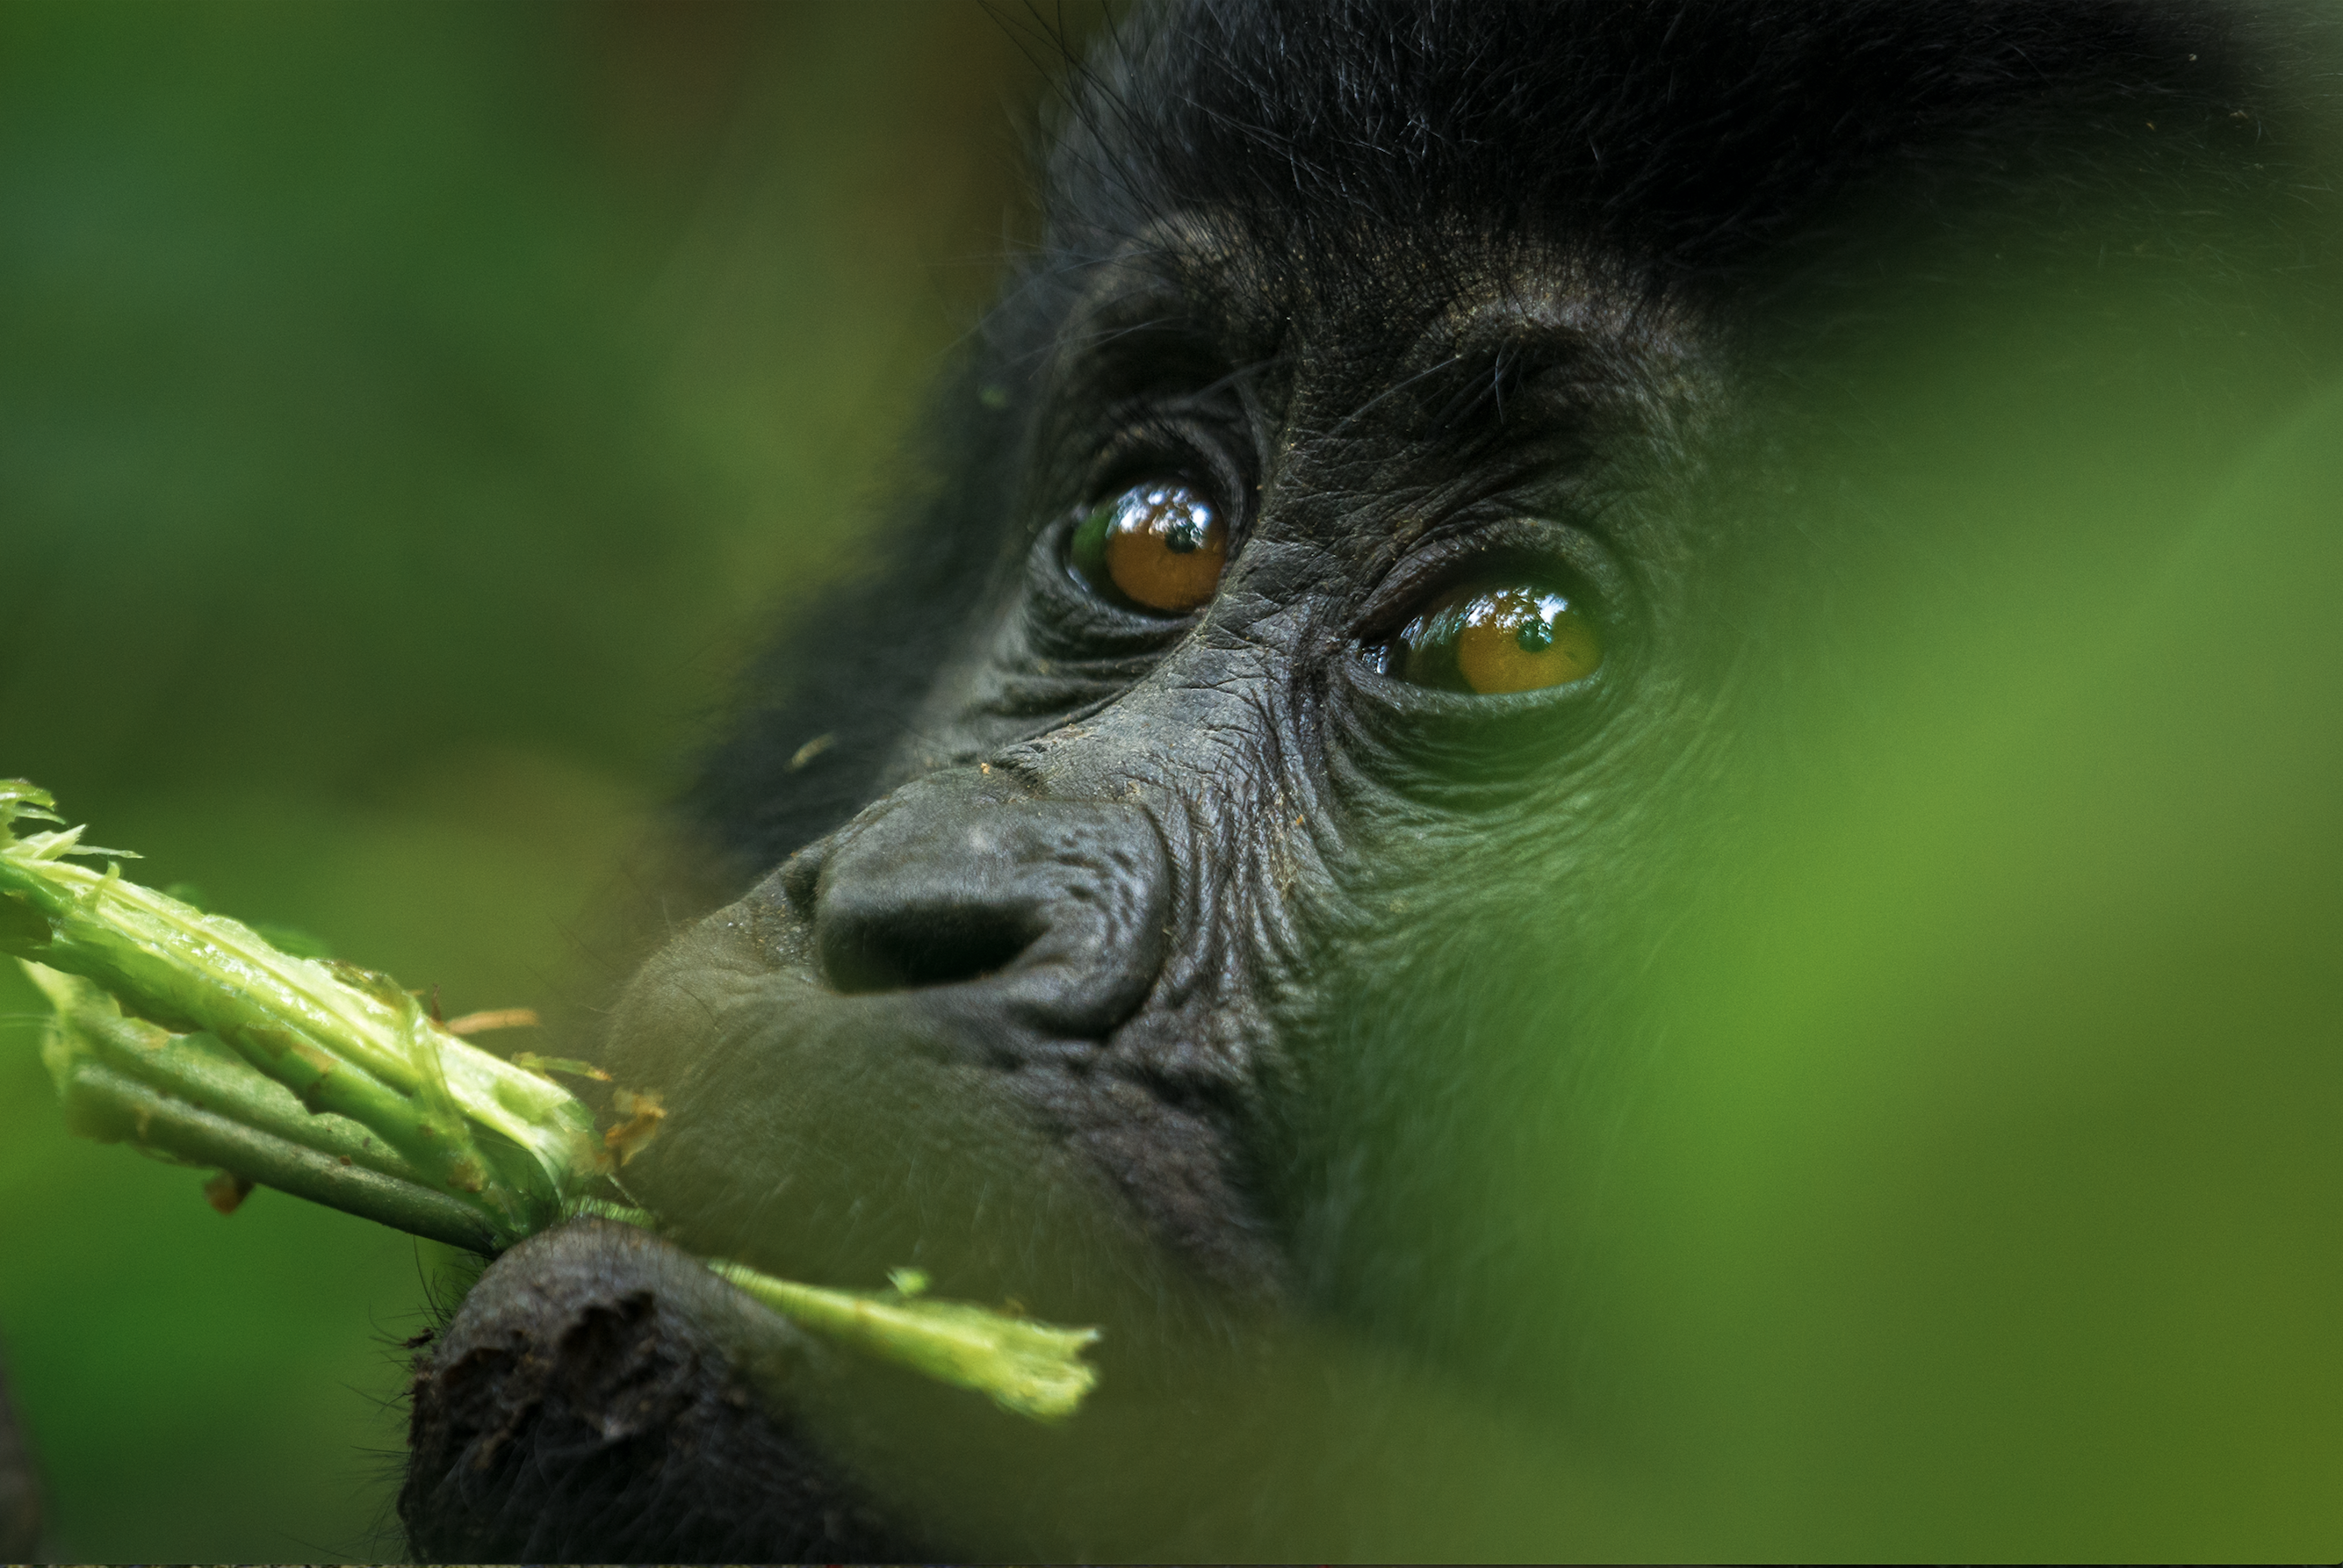 An eastern mountain gorilla baby feeding at Bwindi Impenetrable National Park, Uganda. Image via Shutterstock.